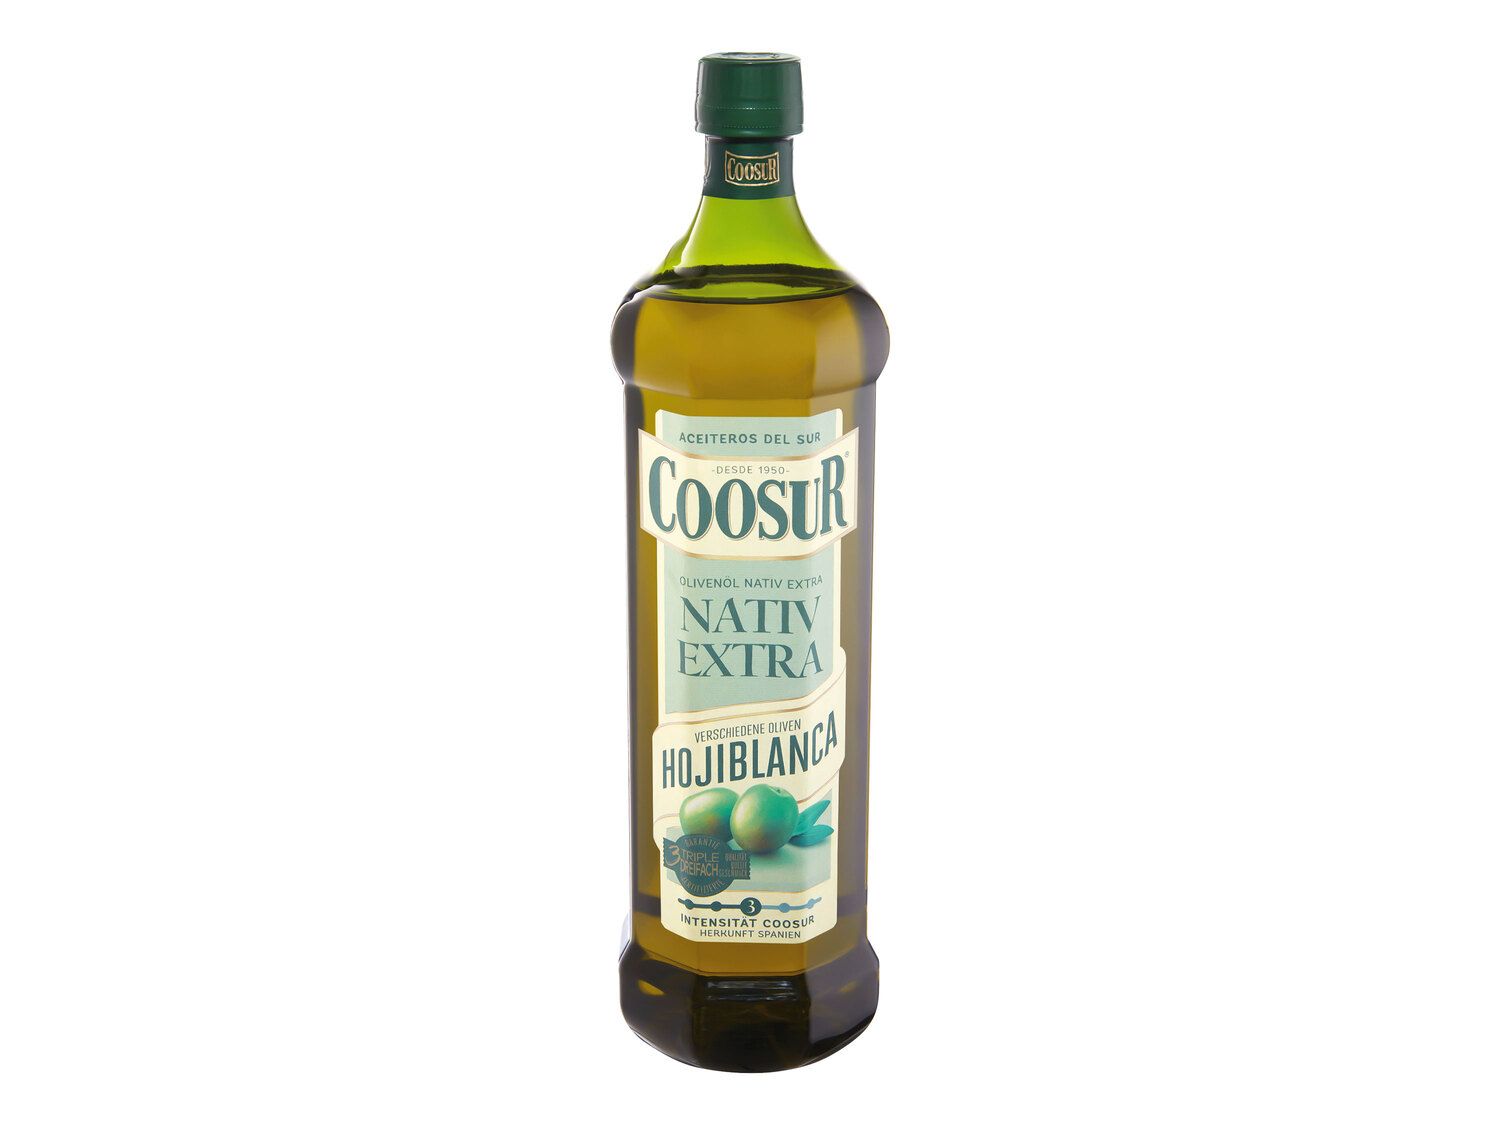 - Deutschland Olivenöl Lidl Hojiblanca Coosur